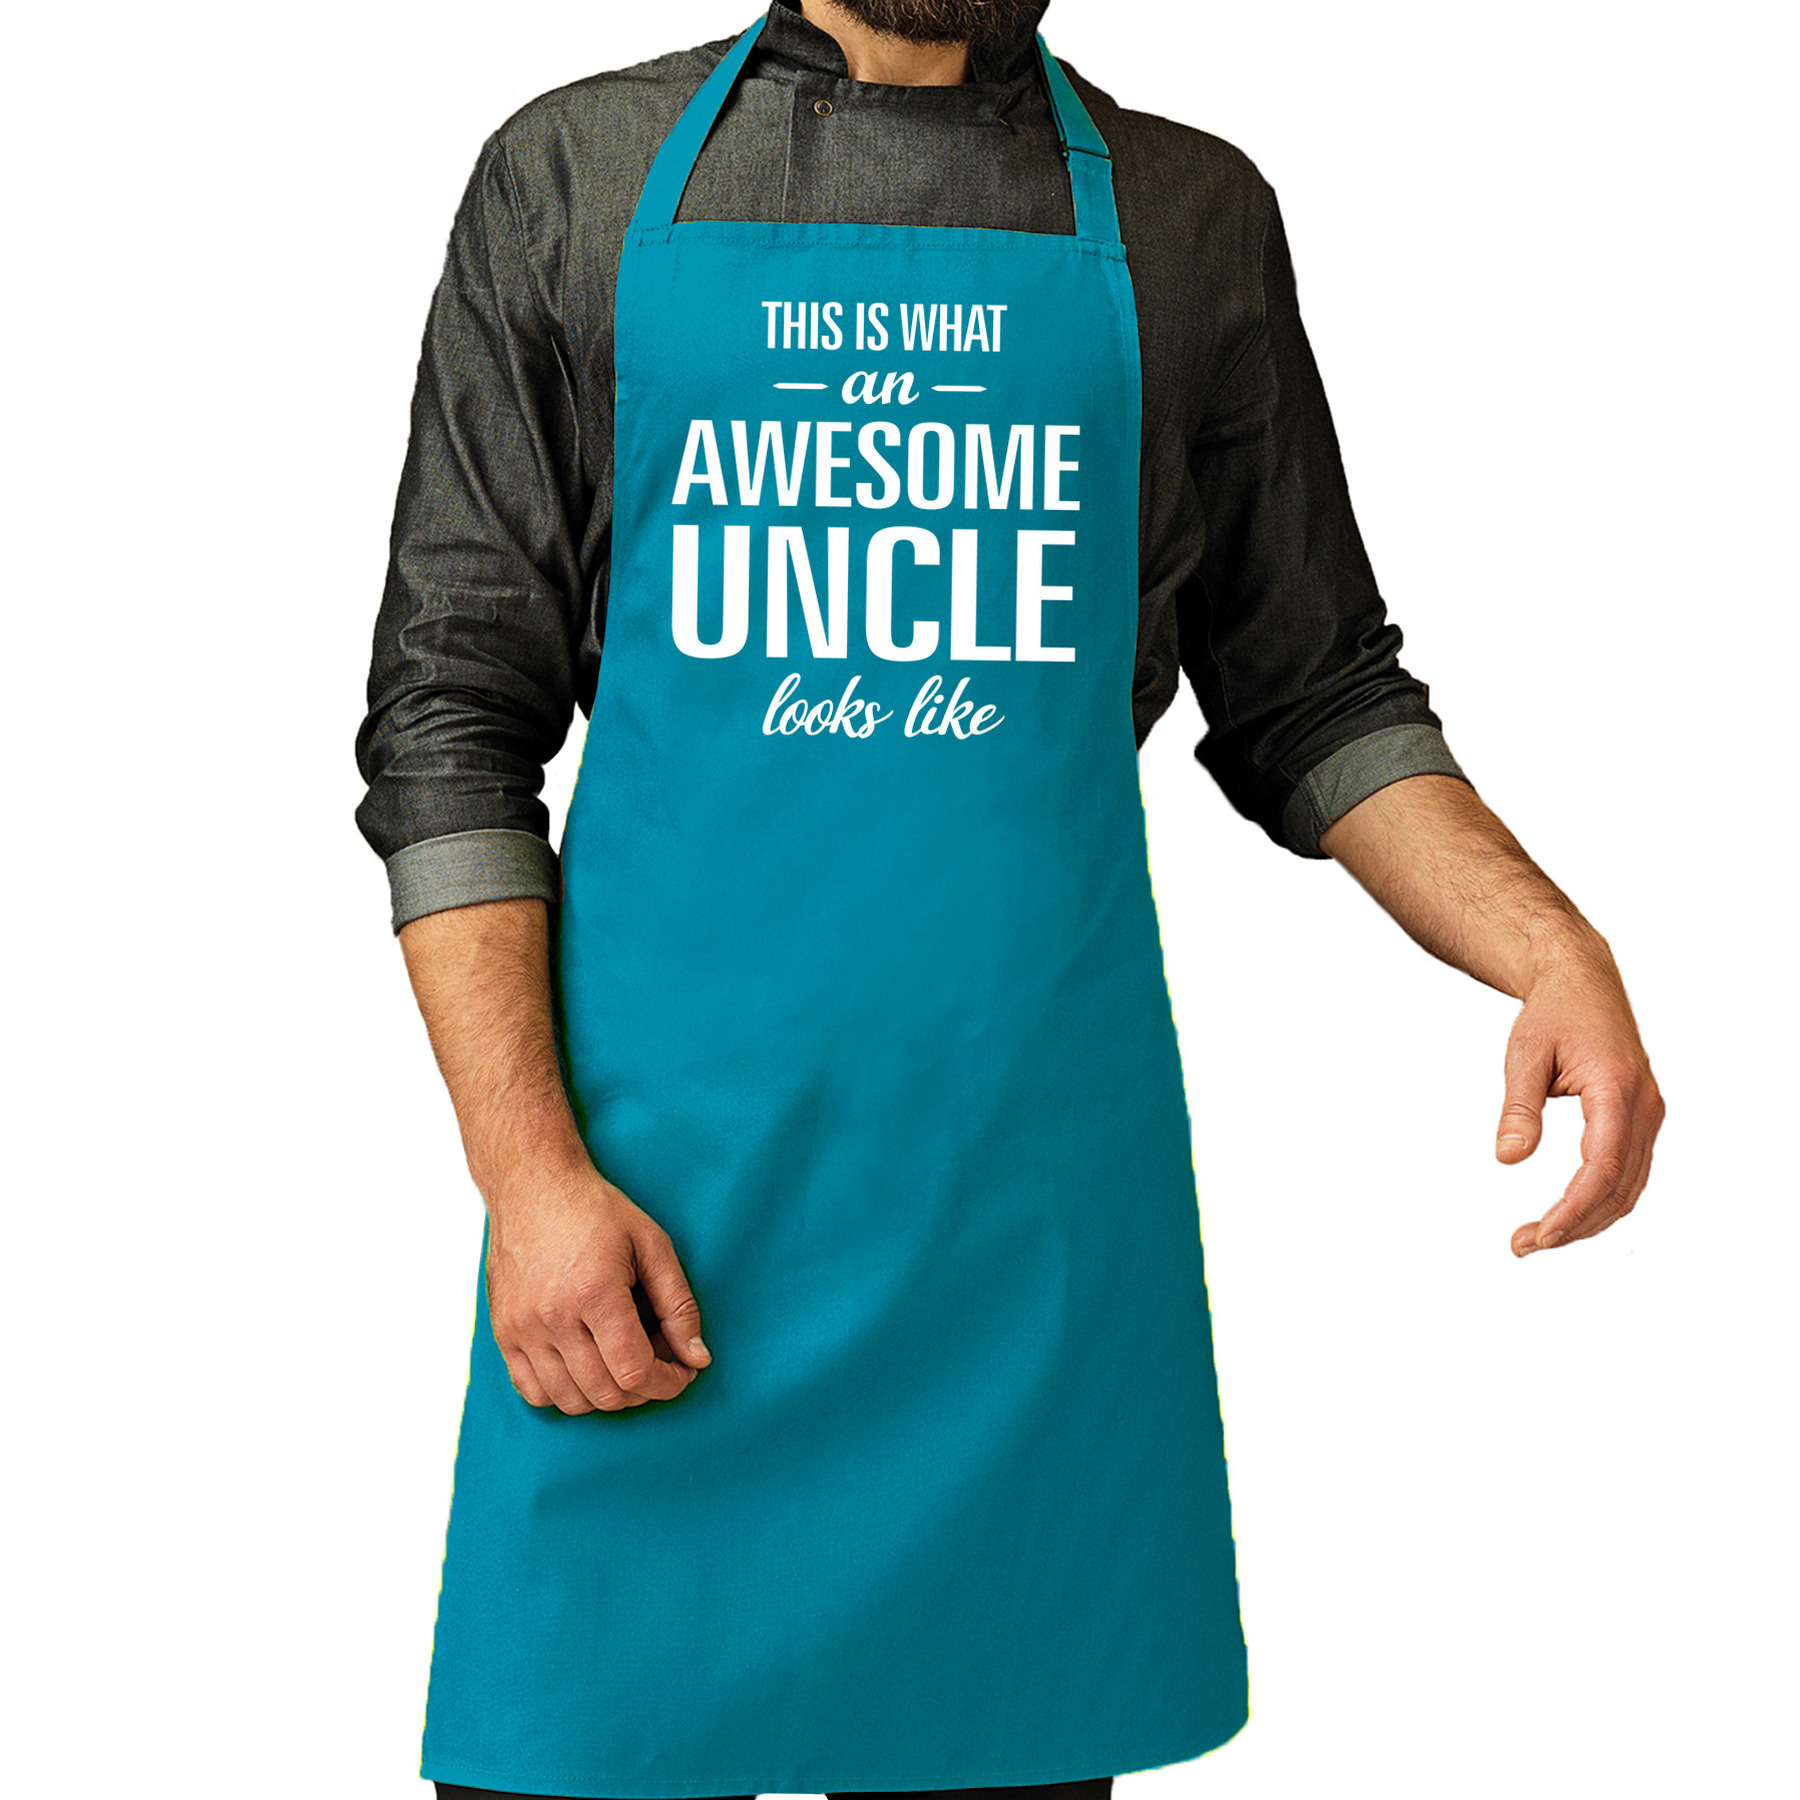 Awesome uncle cadeau bbq/keuken schort turquoise blauw heren